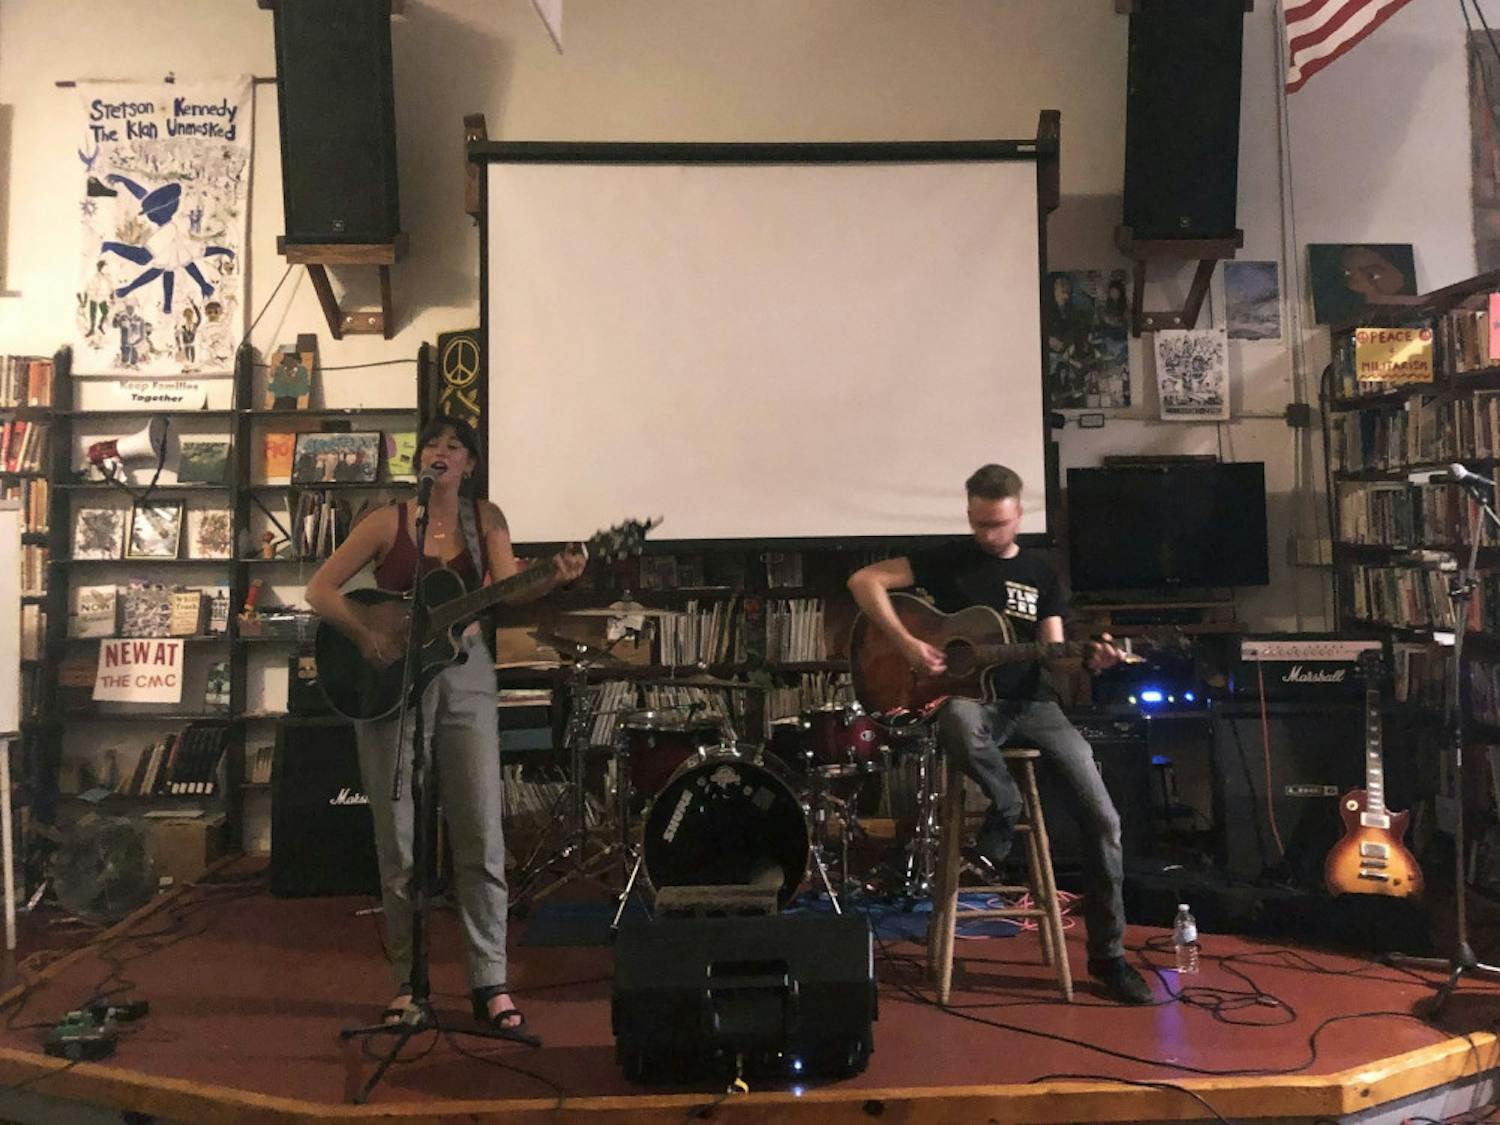 Charlene Joan (left) plays at the Civic Media Center on Sunday accompanied by guitarist Josh Gigantelli (right).